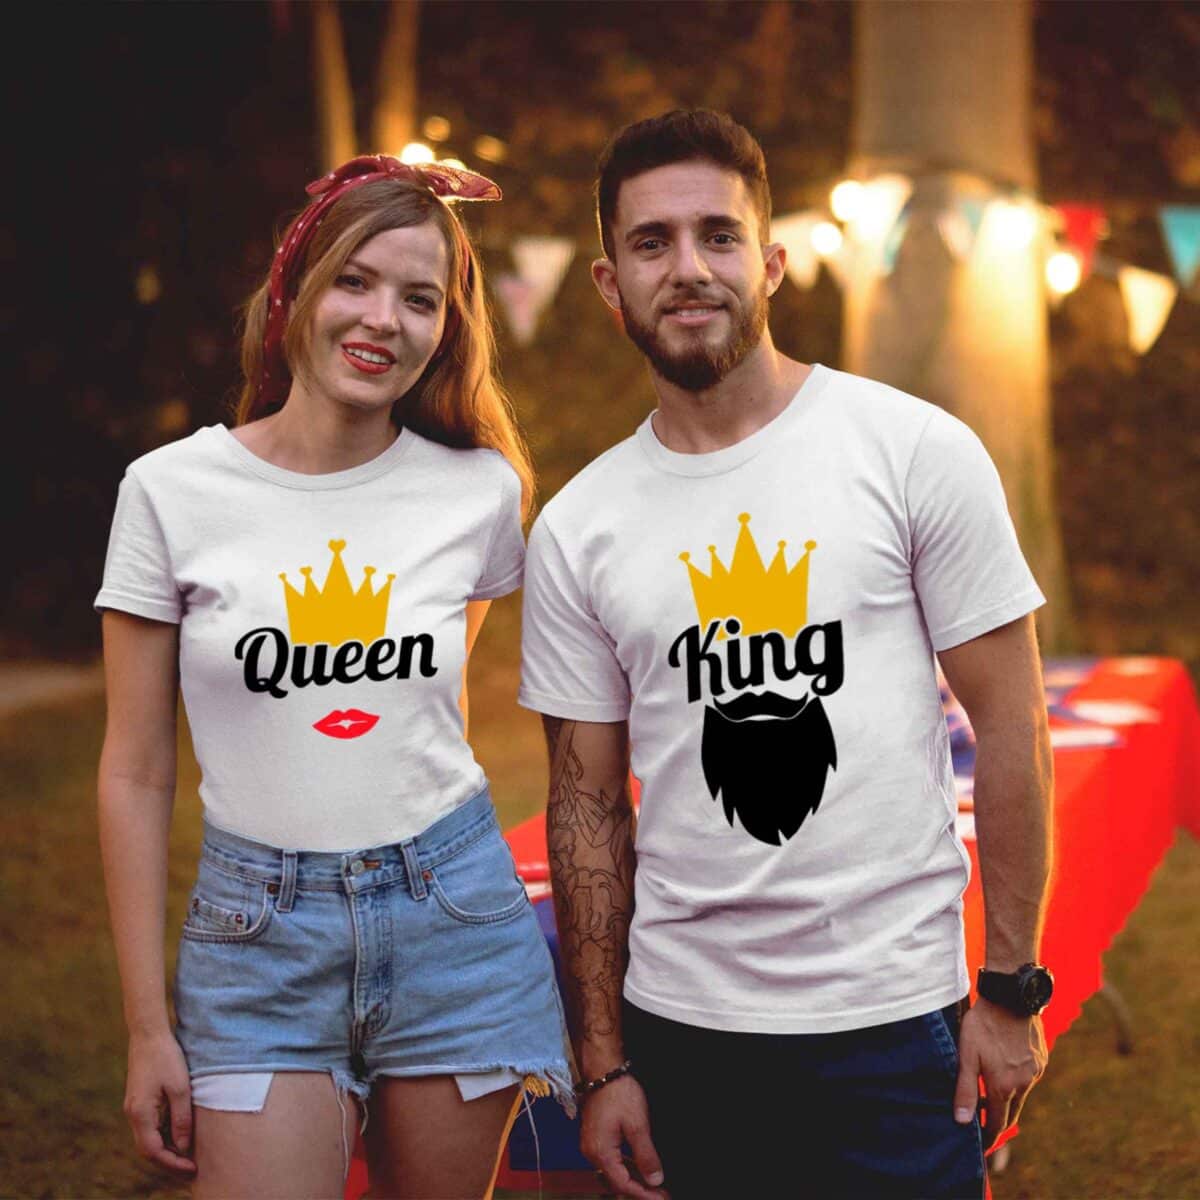 King Queen T-shirts